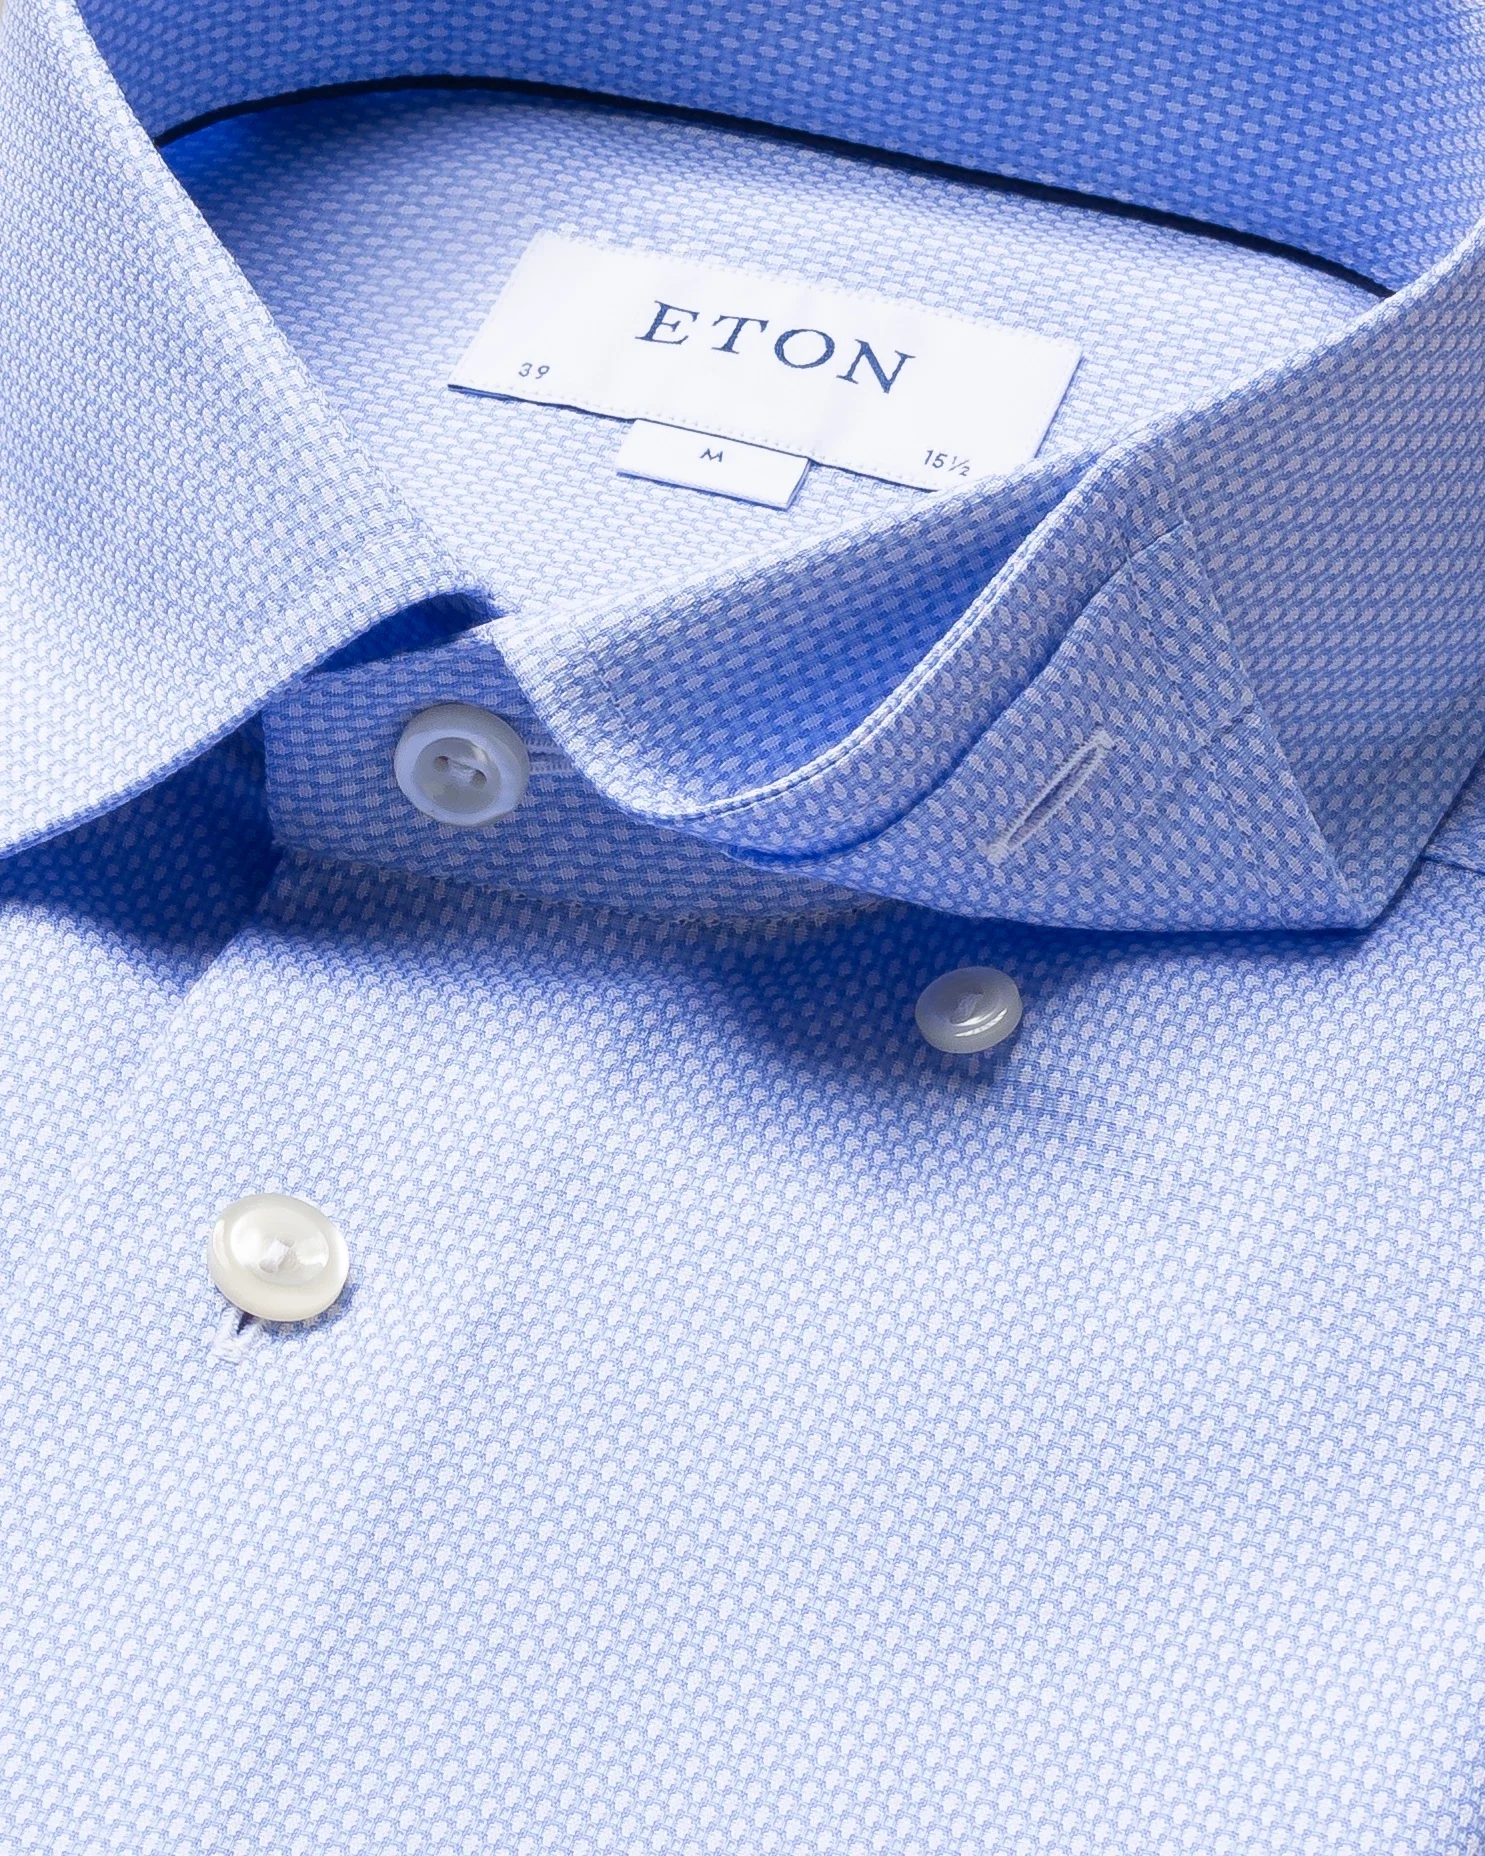 Eton - light blue eton dobby shirt